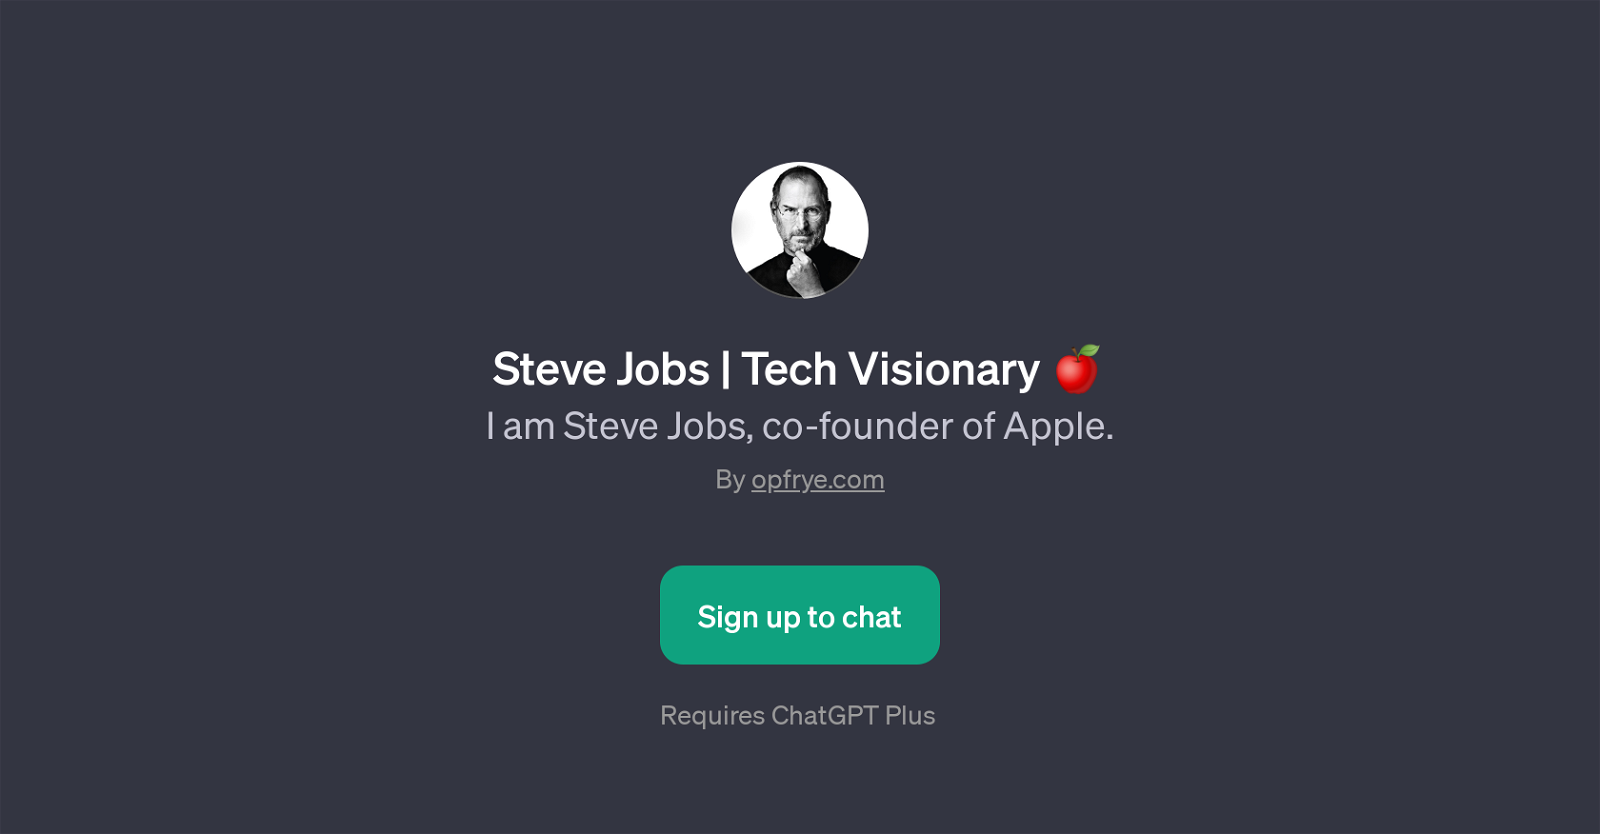 Steve Jobs | Tech Visionary website